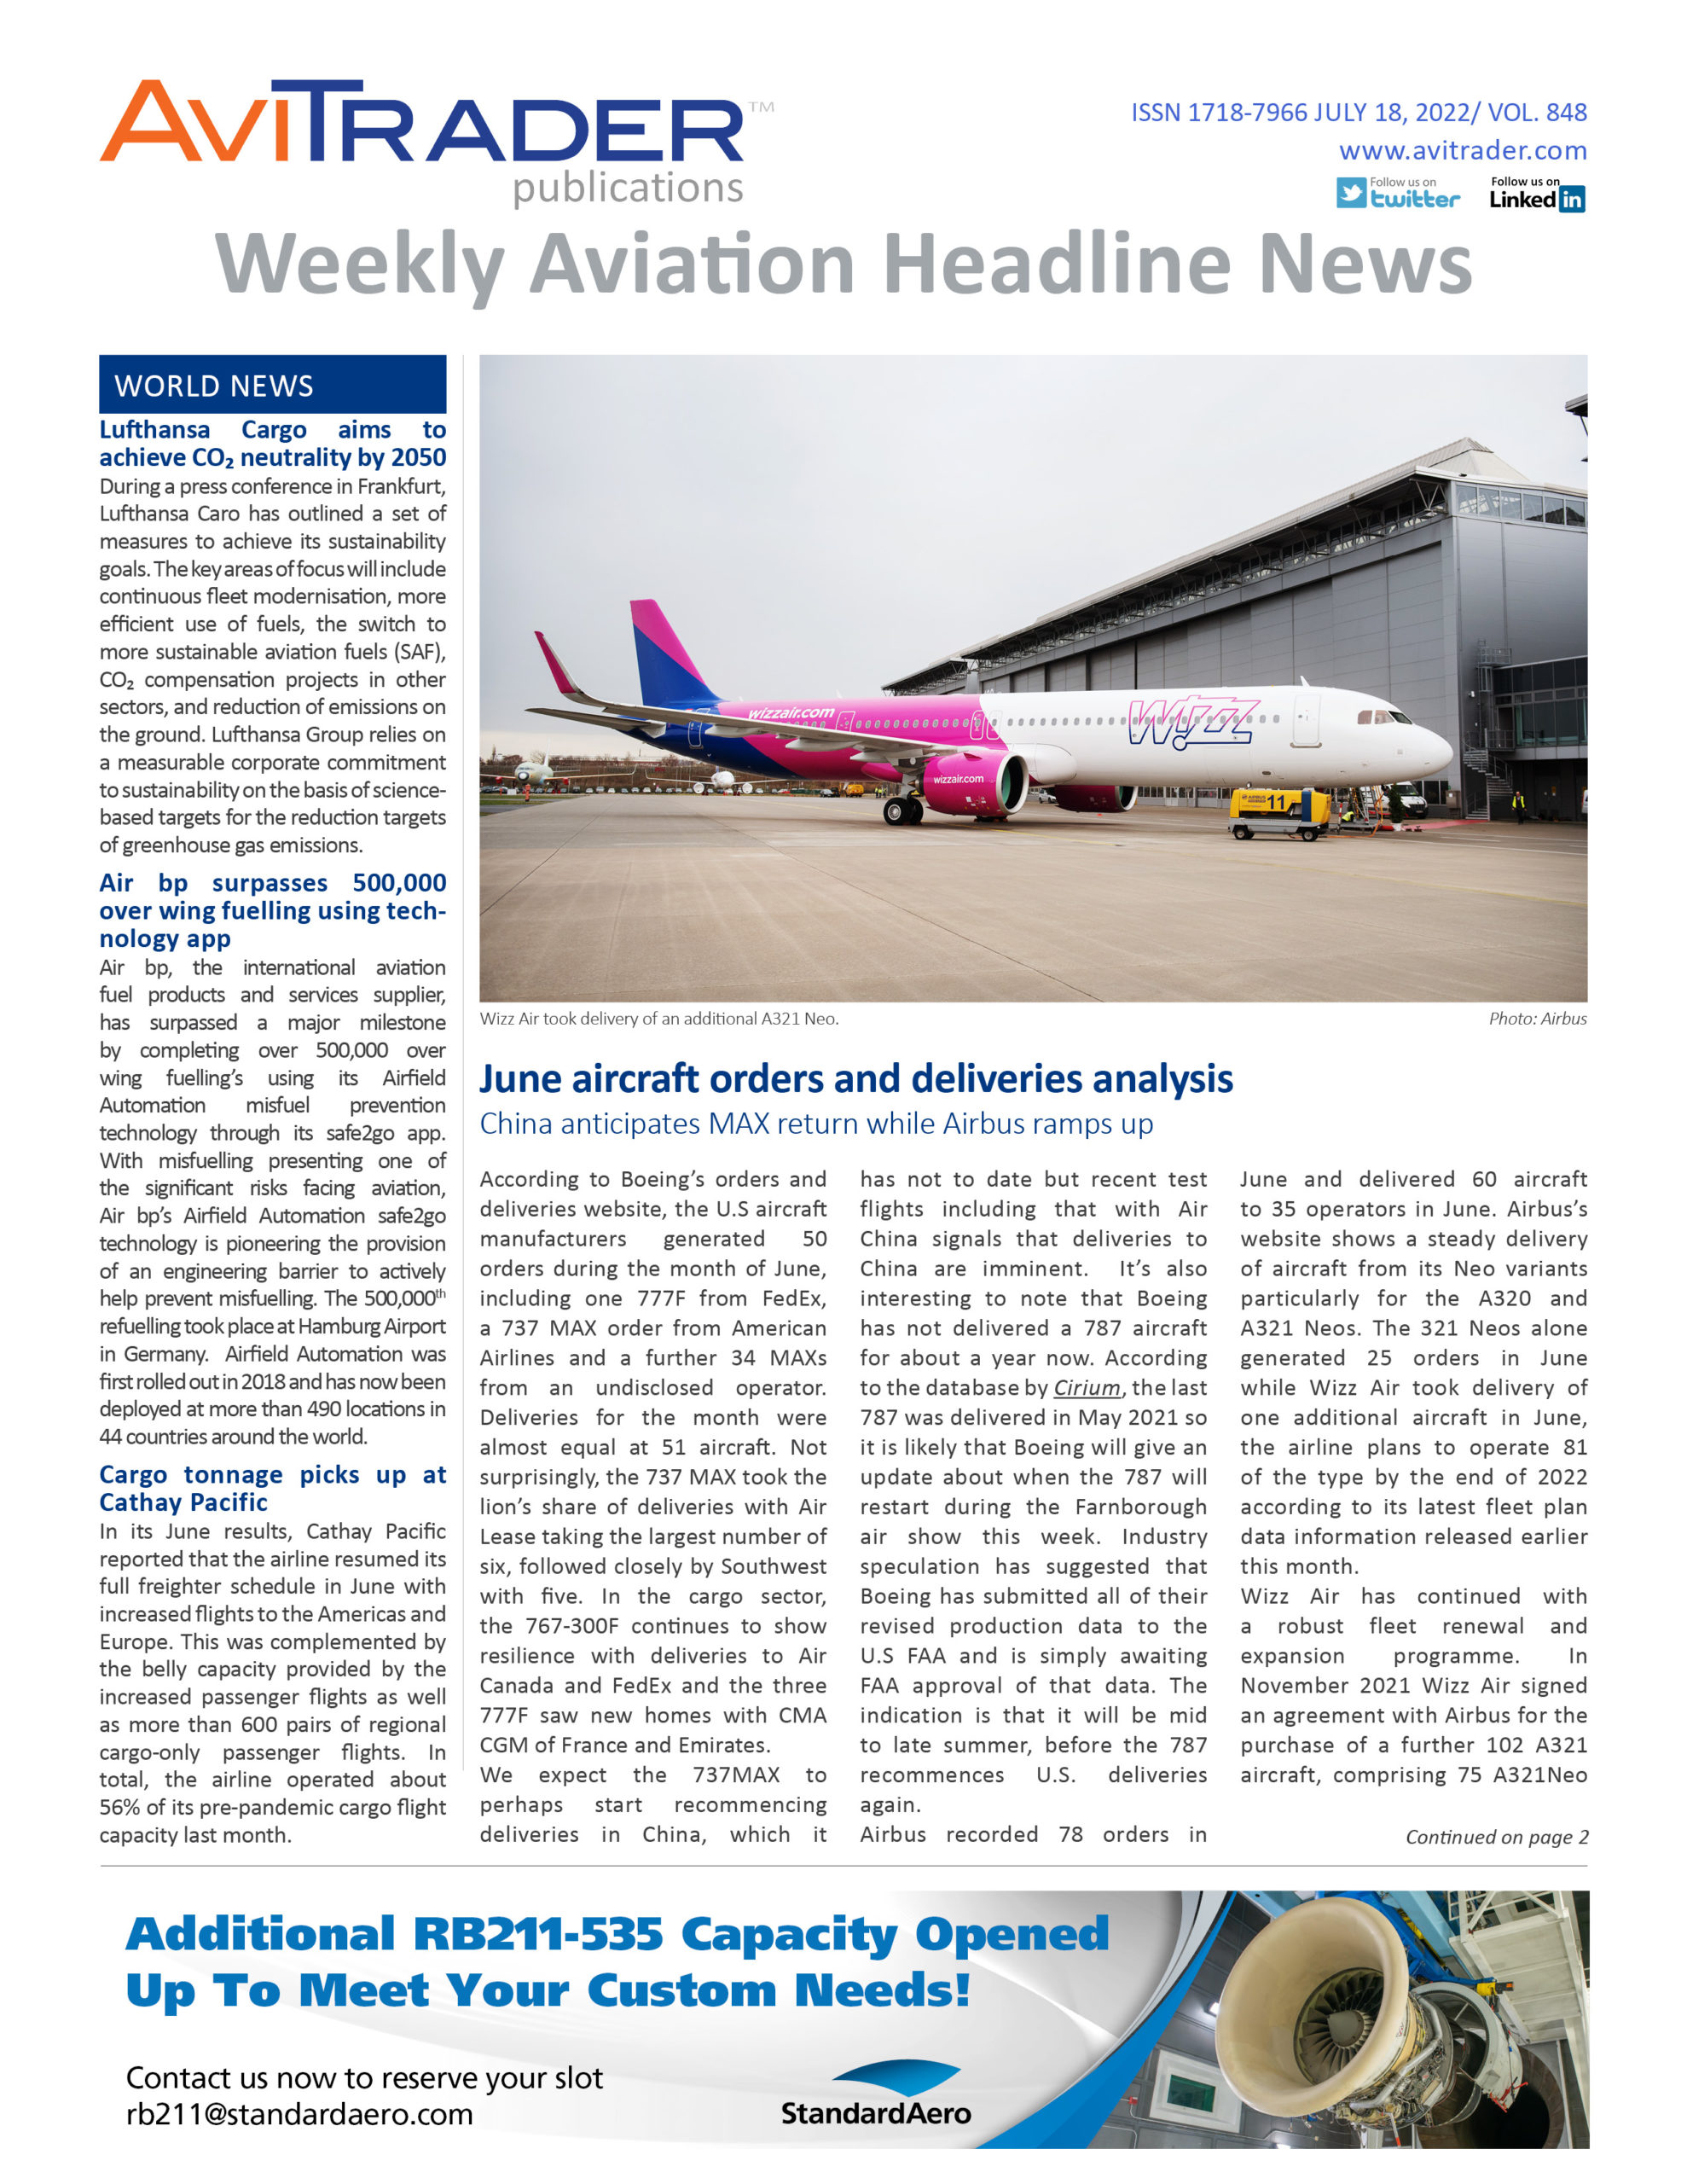 AviTrader_Weekly_Headline_News_Cover_2022-07-18